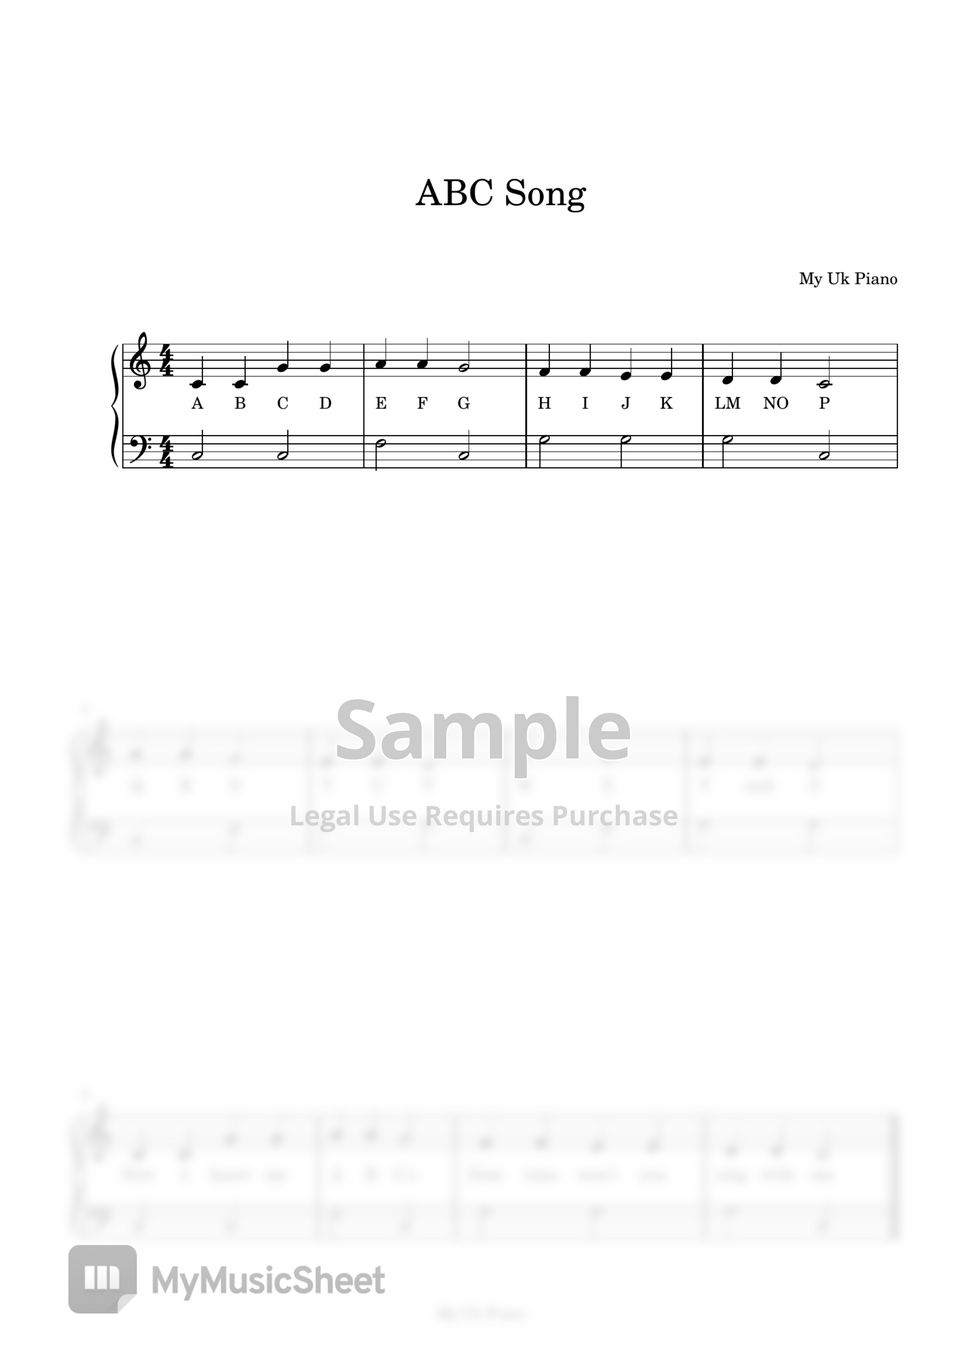 ABC 노래 (ABC Song) (매우쉬운 피아노악보) by My Uk Piano